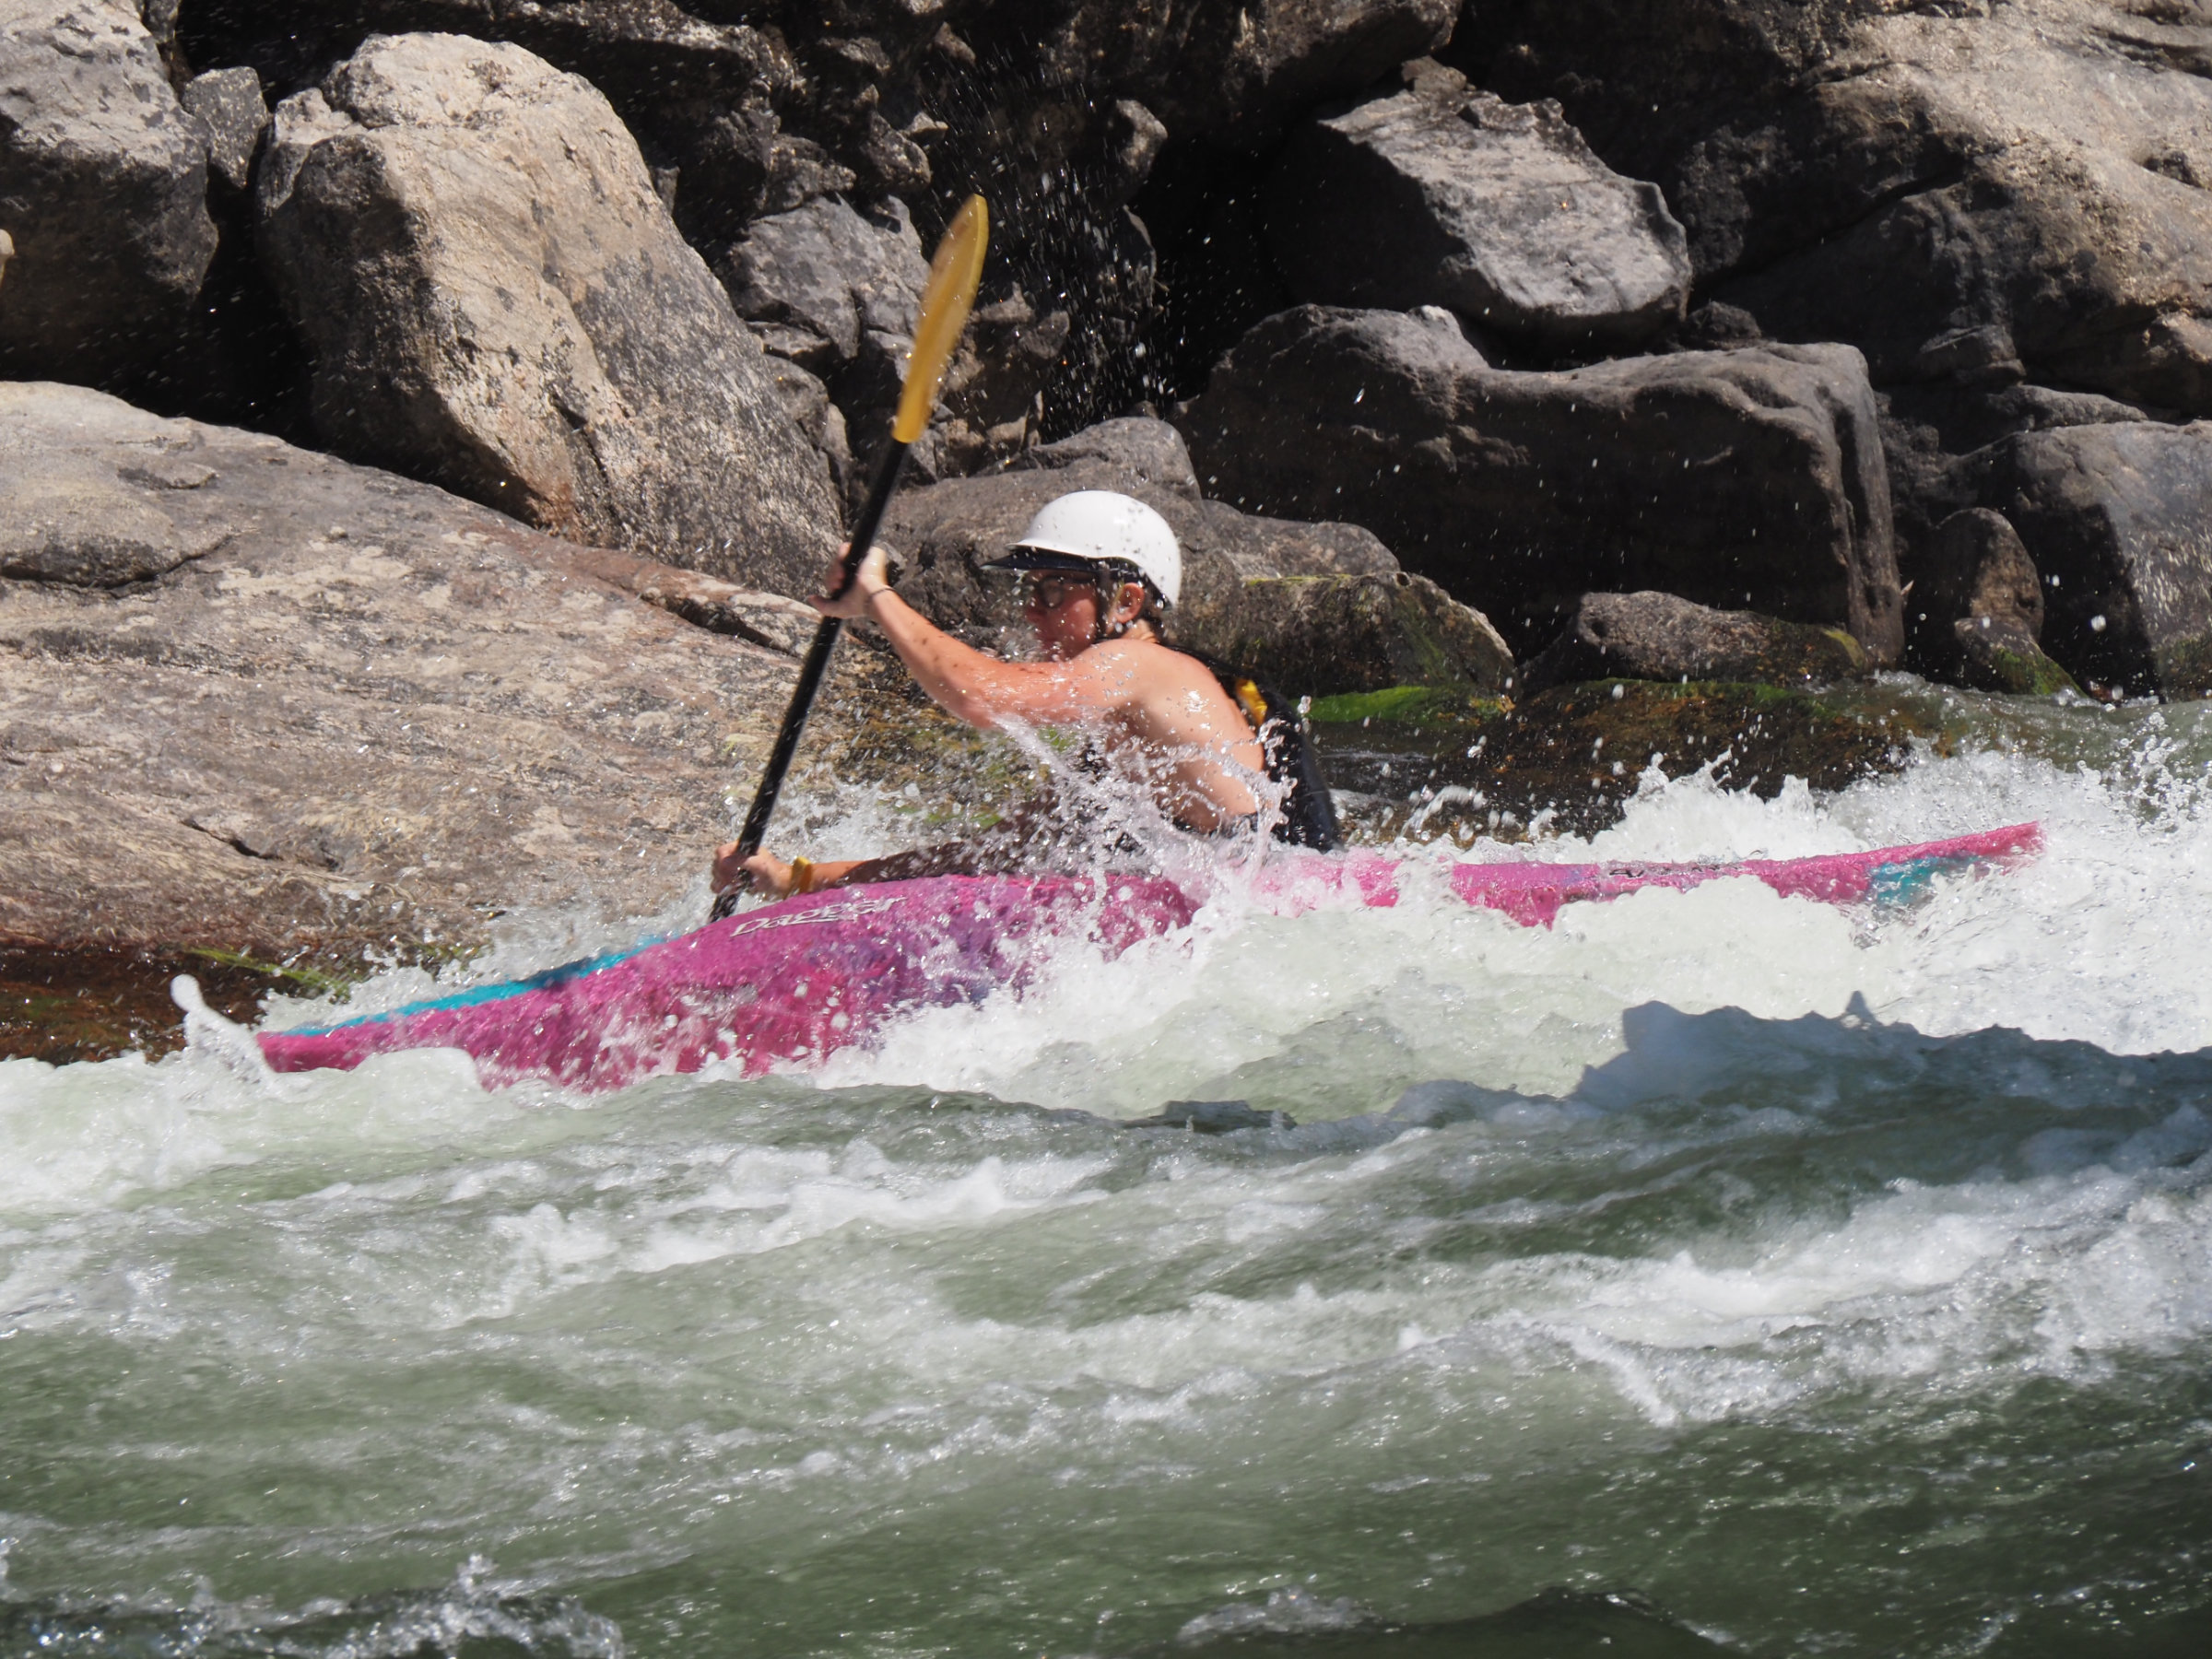 teen-kayak-camp-beginner-in-rapid